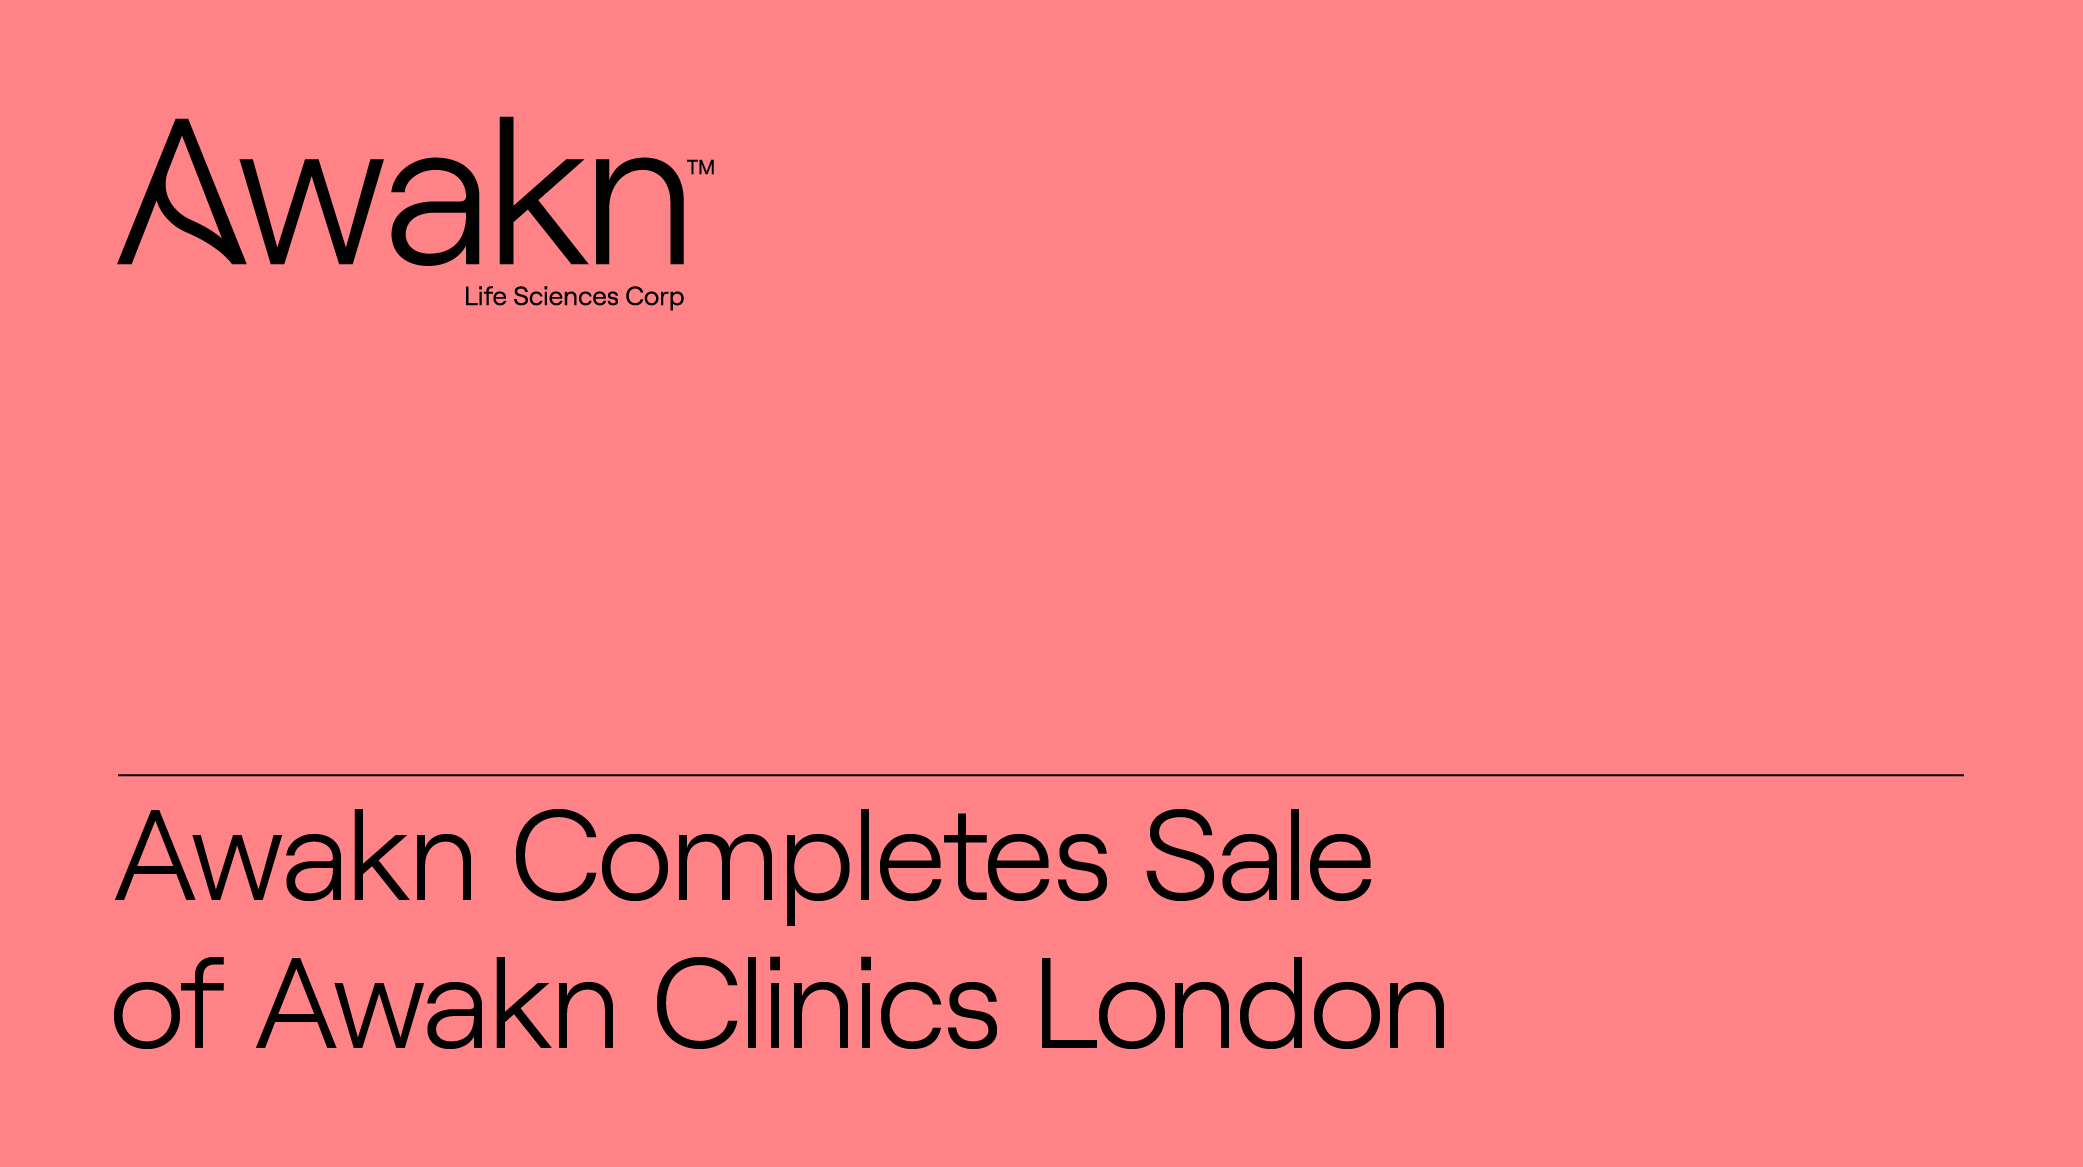 Awakn Life Sciences Completes Sale of Awakn Clinics London